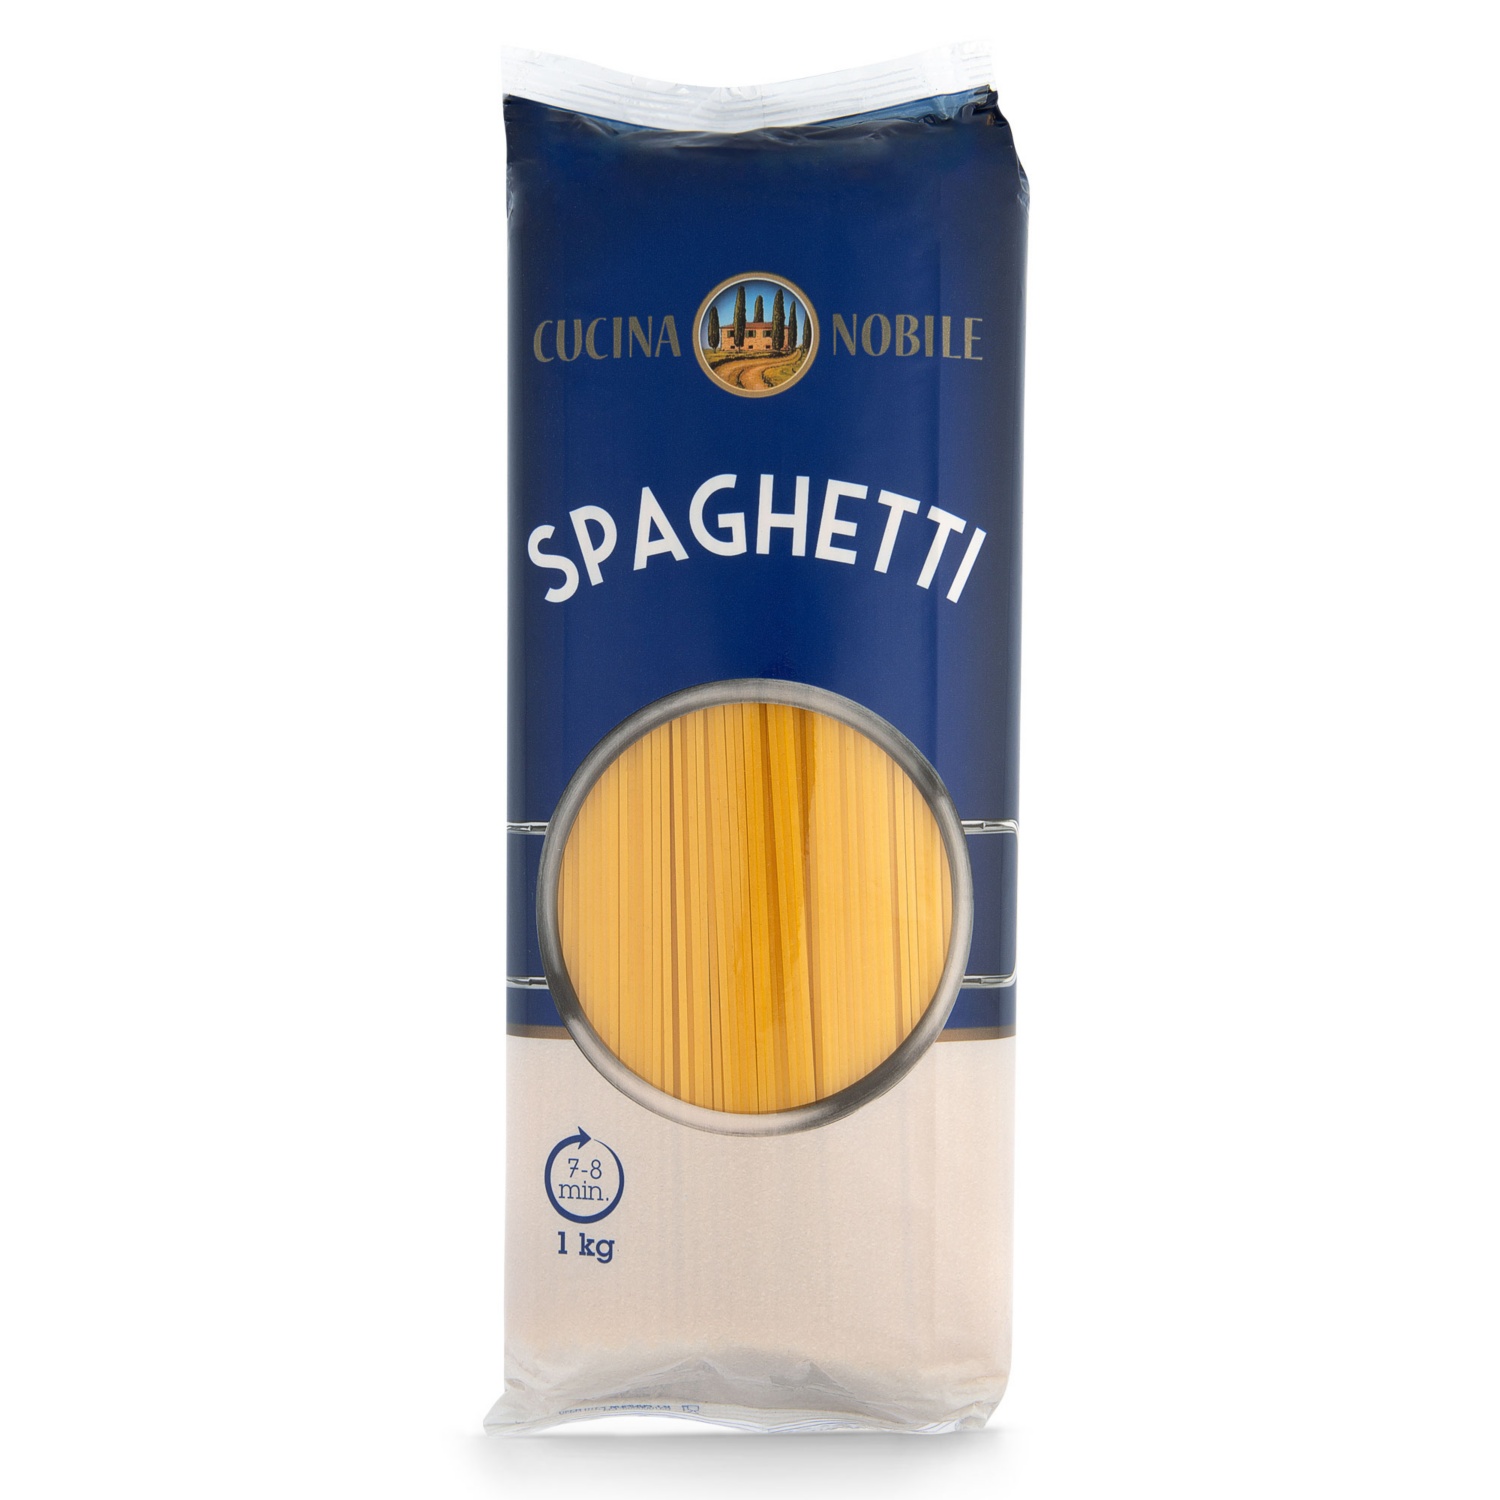 CUCINA NOBILE Spaghetti